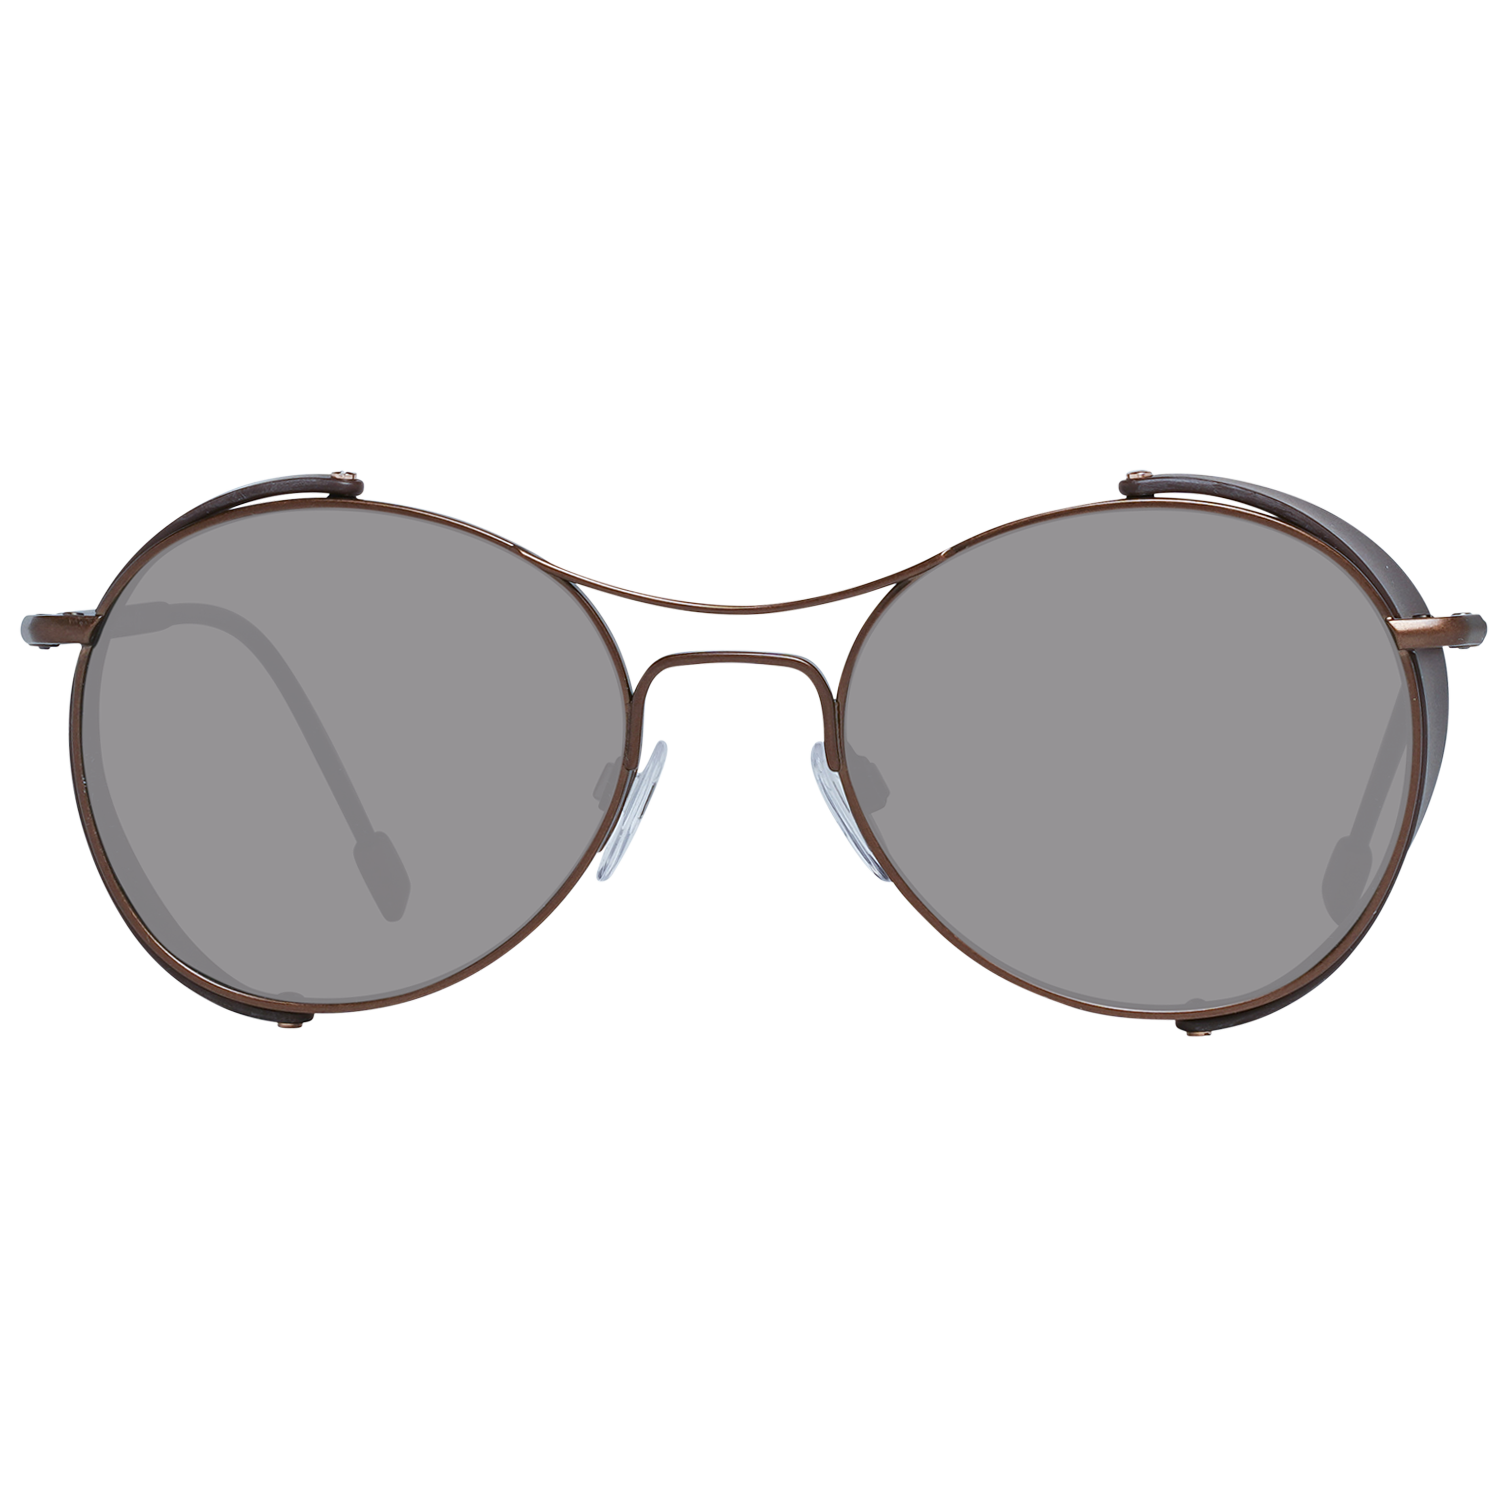 Zegna Couture Sunglasses Zegna Couture Sunglasses ZC0022 52 37J Titanium Eyeglasses Eyewear UK USA Australia 